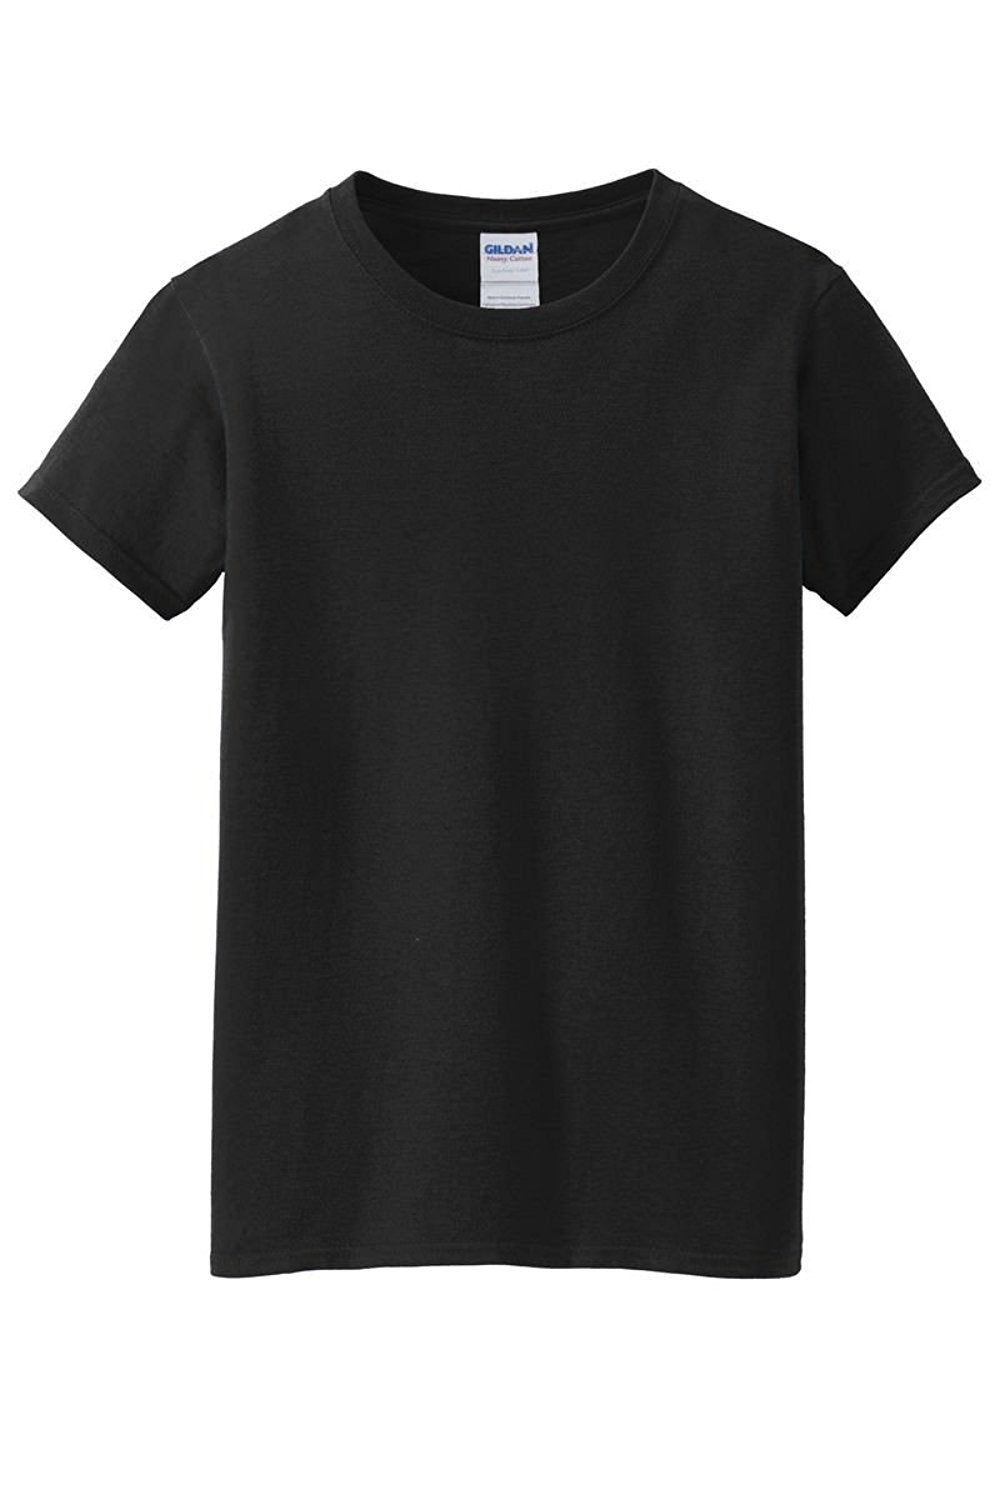 Gildan Blank T Shirt